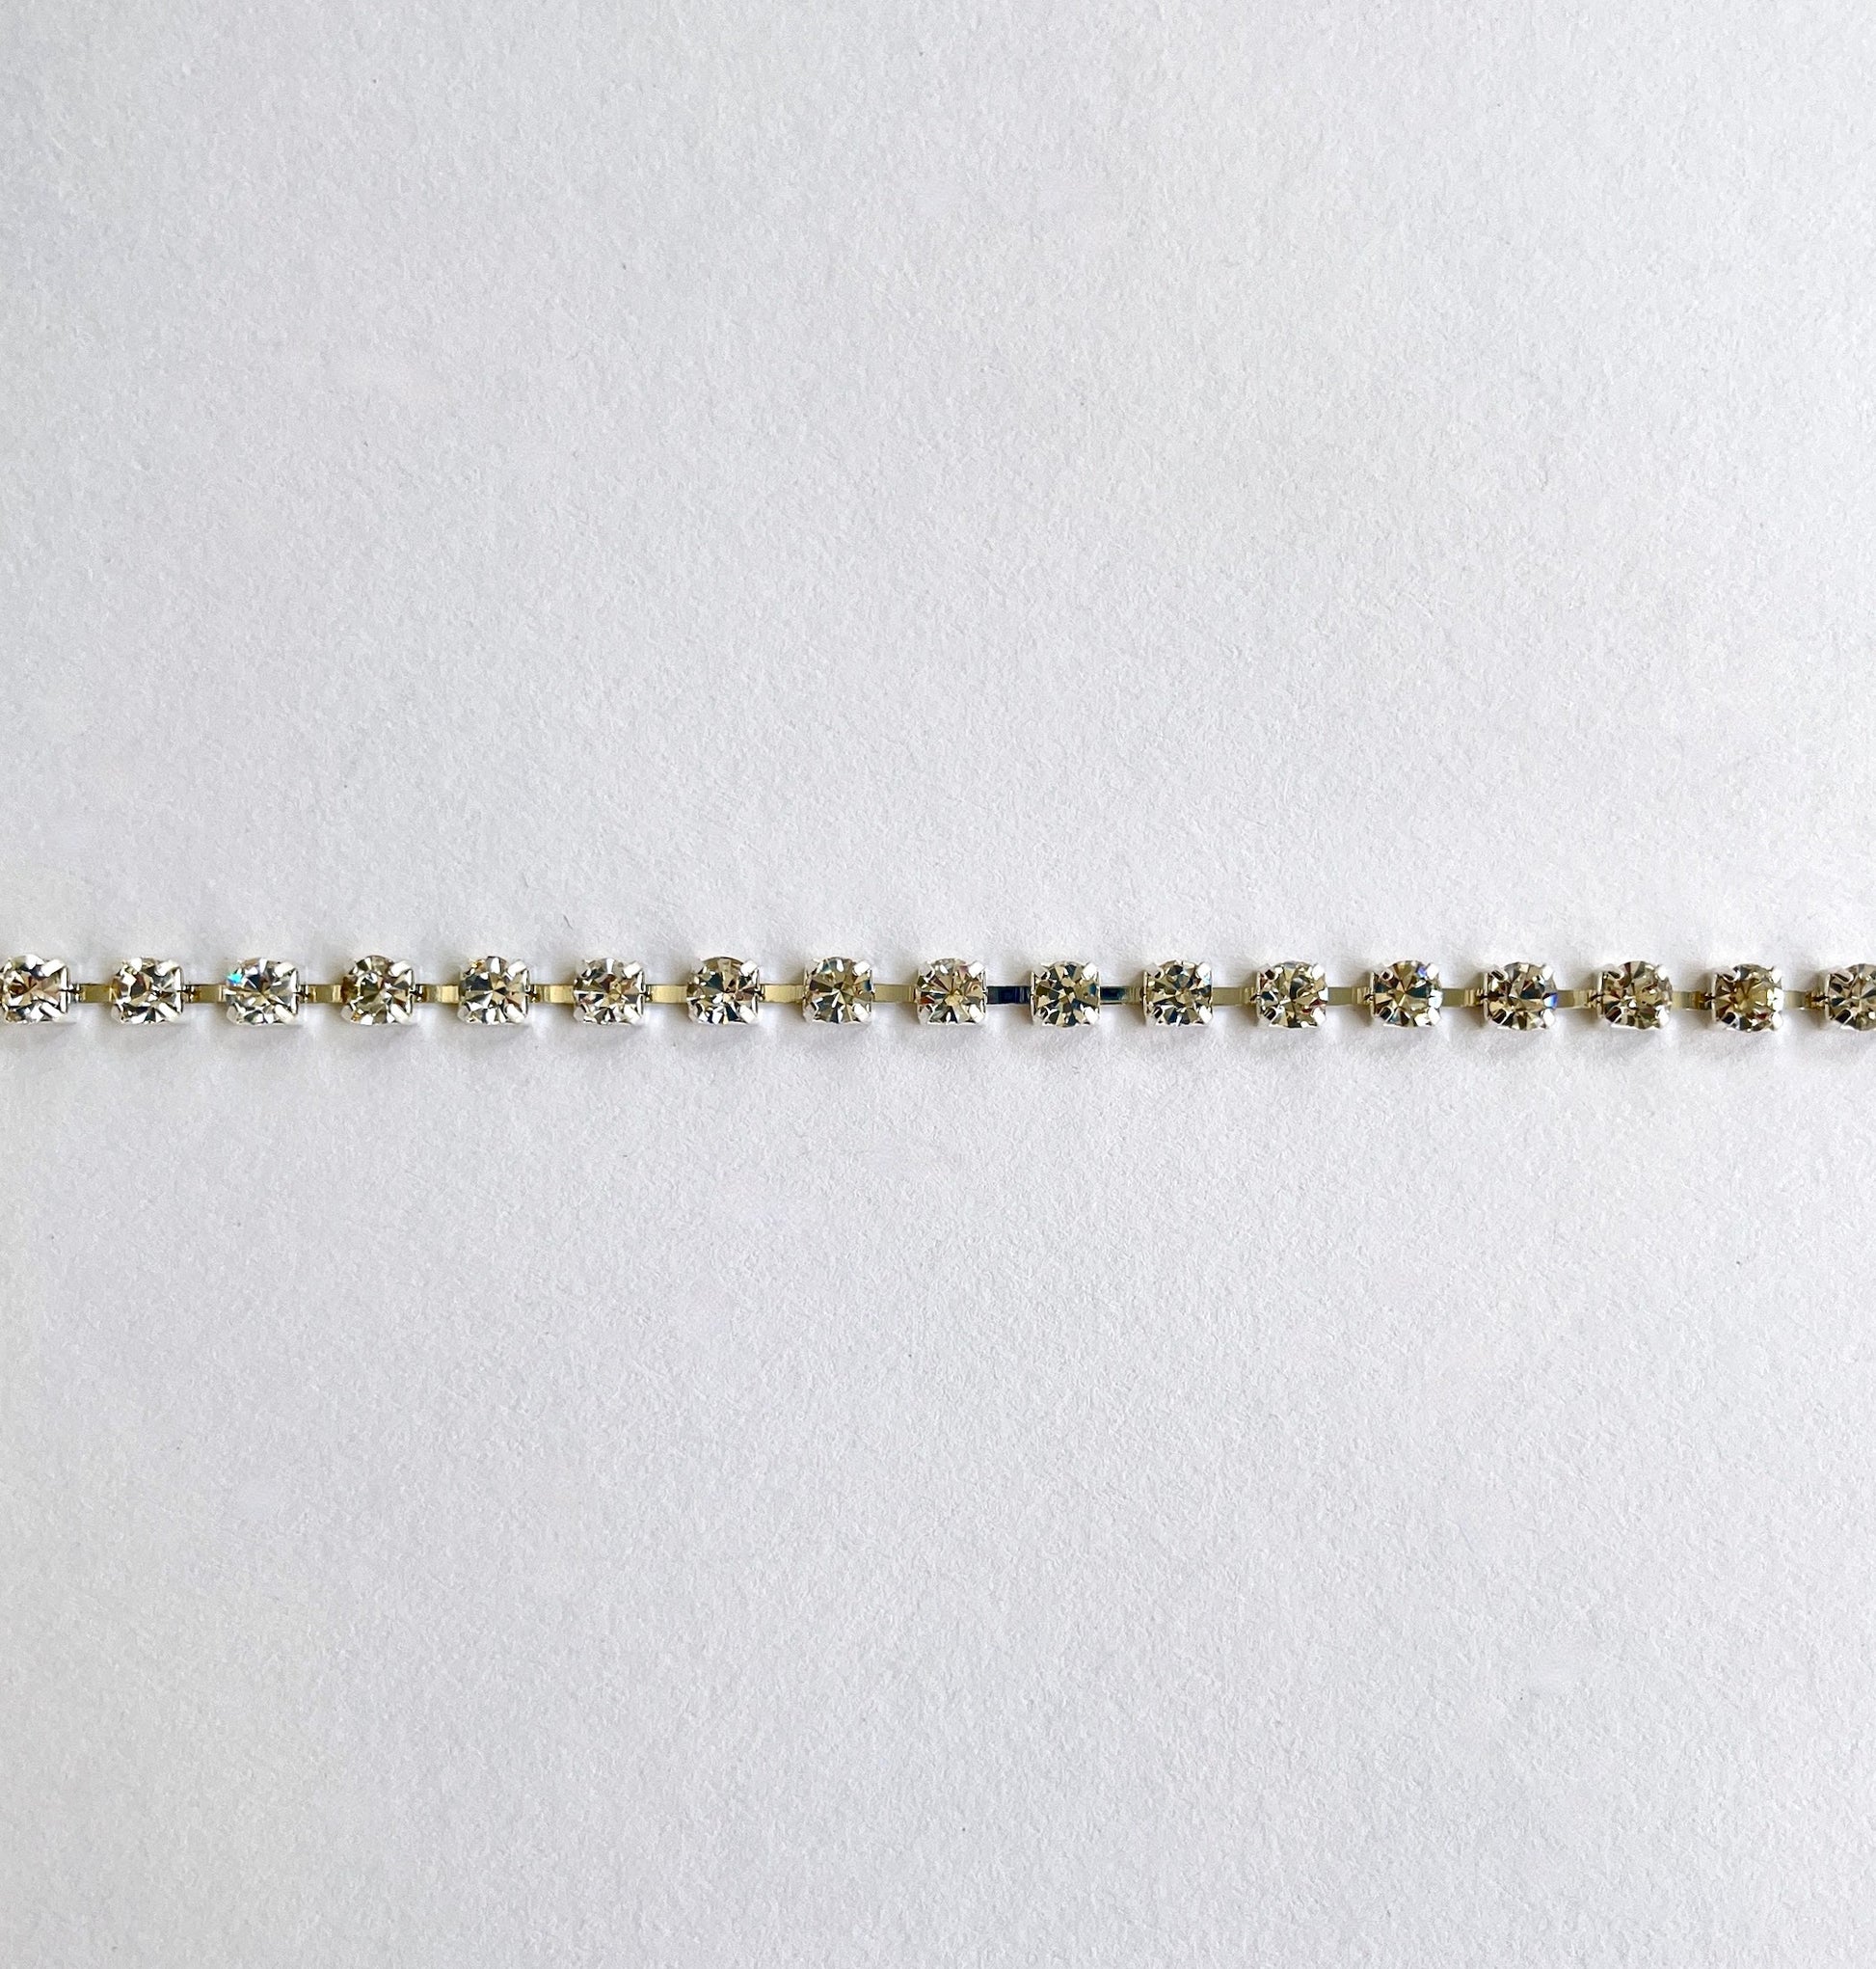 Sparkly rhinestone trim - premium high grade diamanté crystals set in a flexible metal chain casing. Popular for bridal wear, evening wear, crafts, jewellery and headband making.